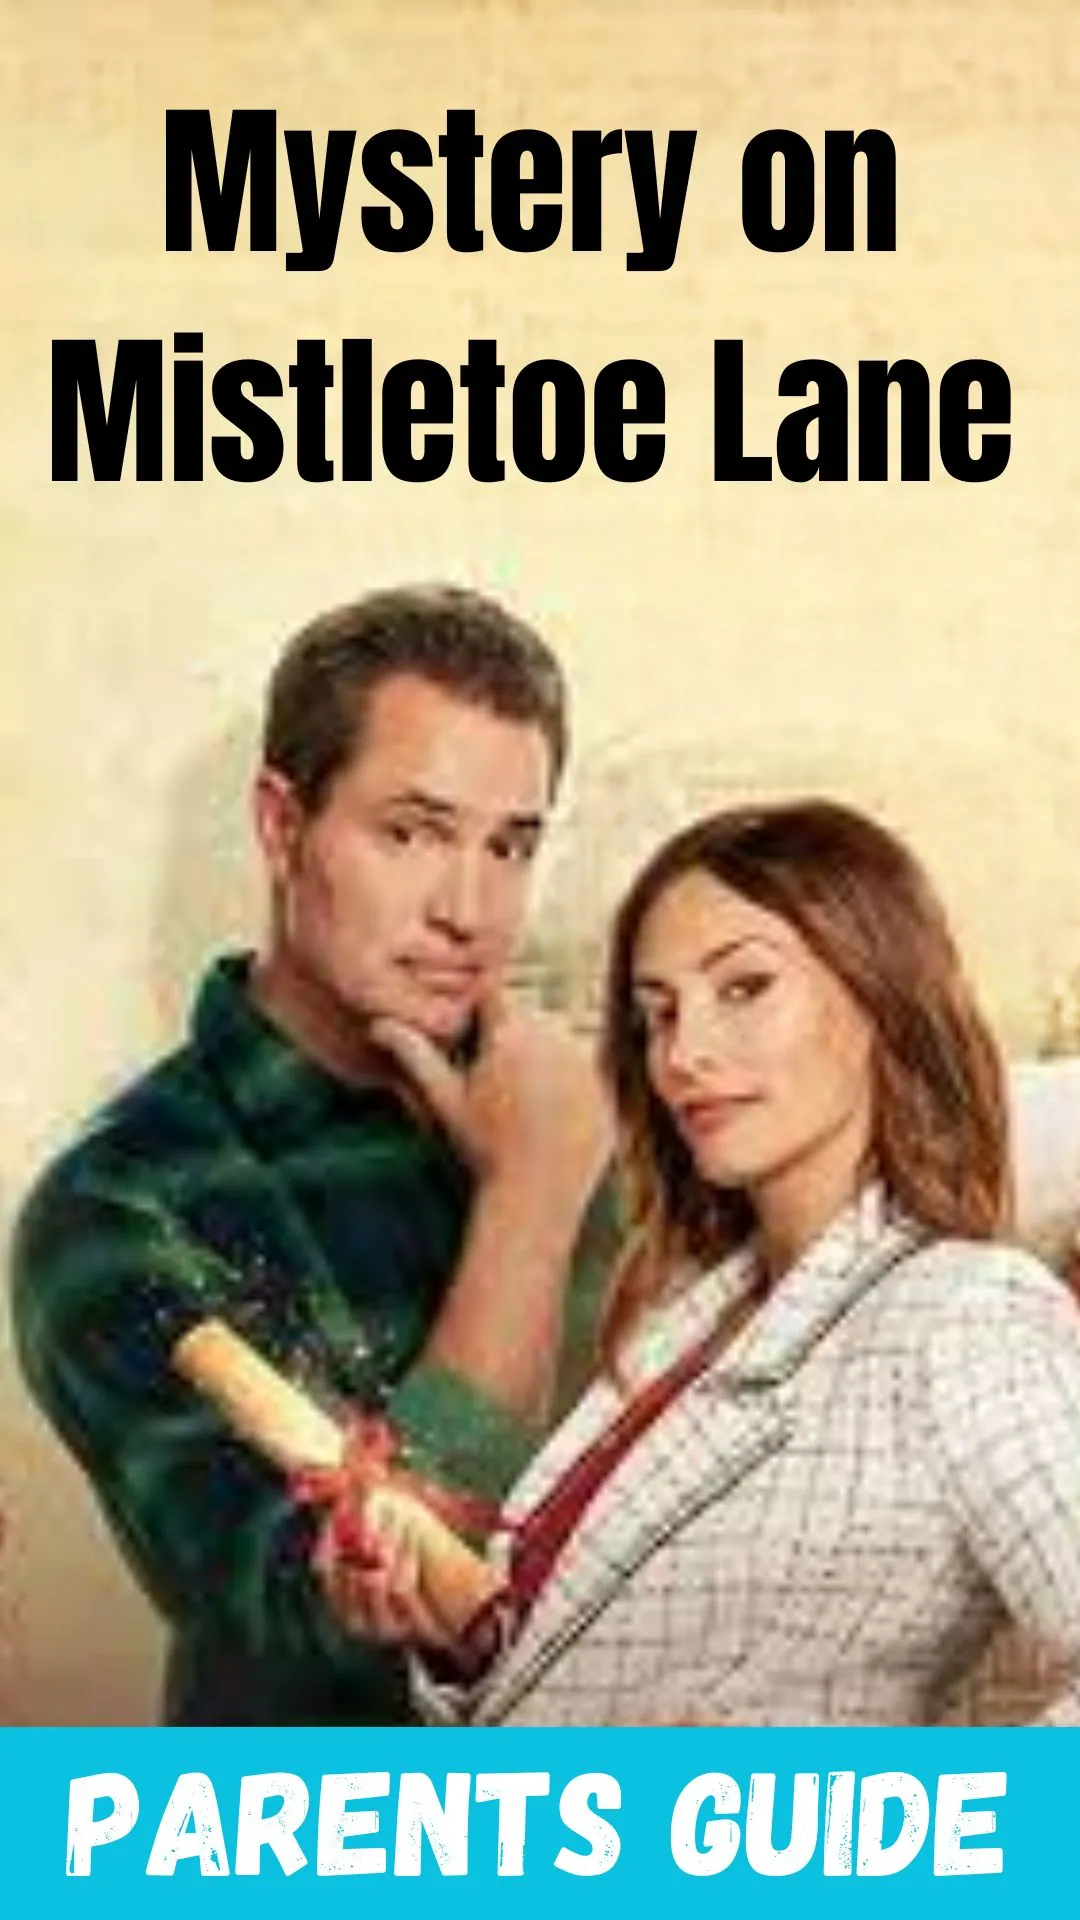 Mystery on Mistletoe Lane Parents Guide (1)